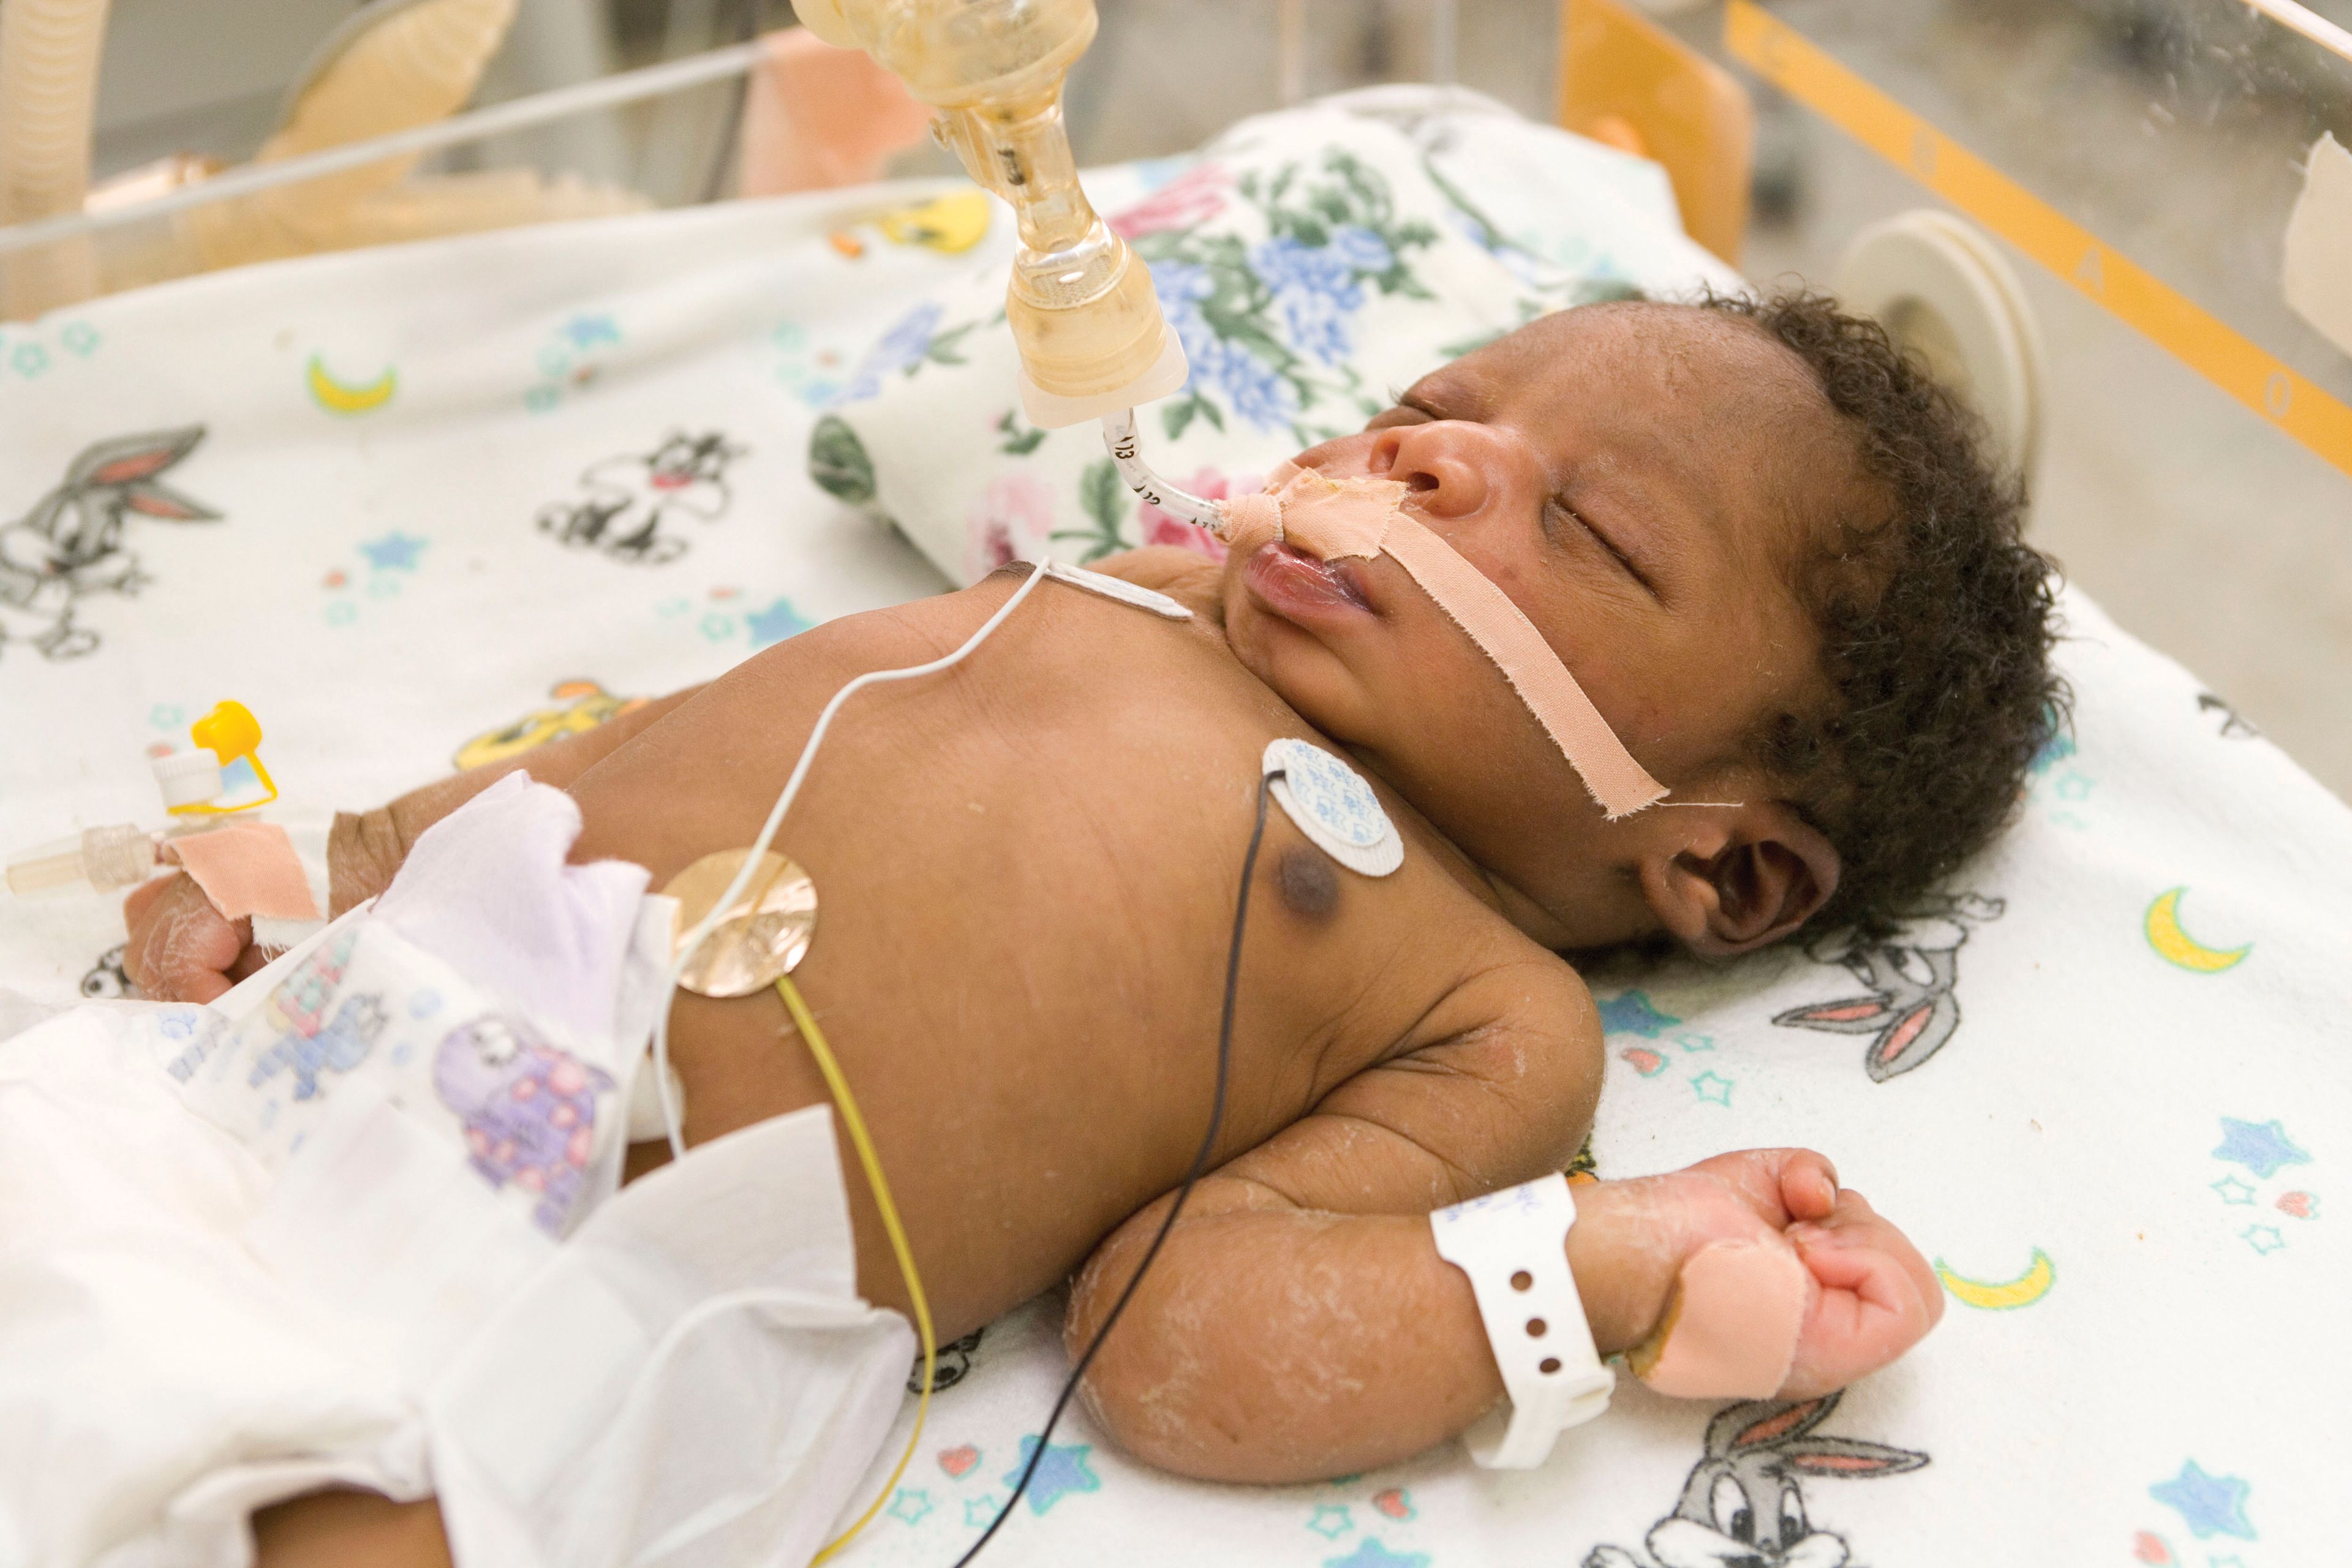 A newborn in a hospital under neonatal care.